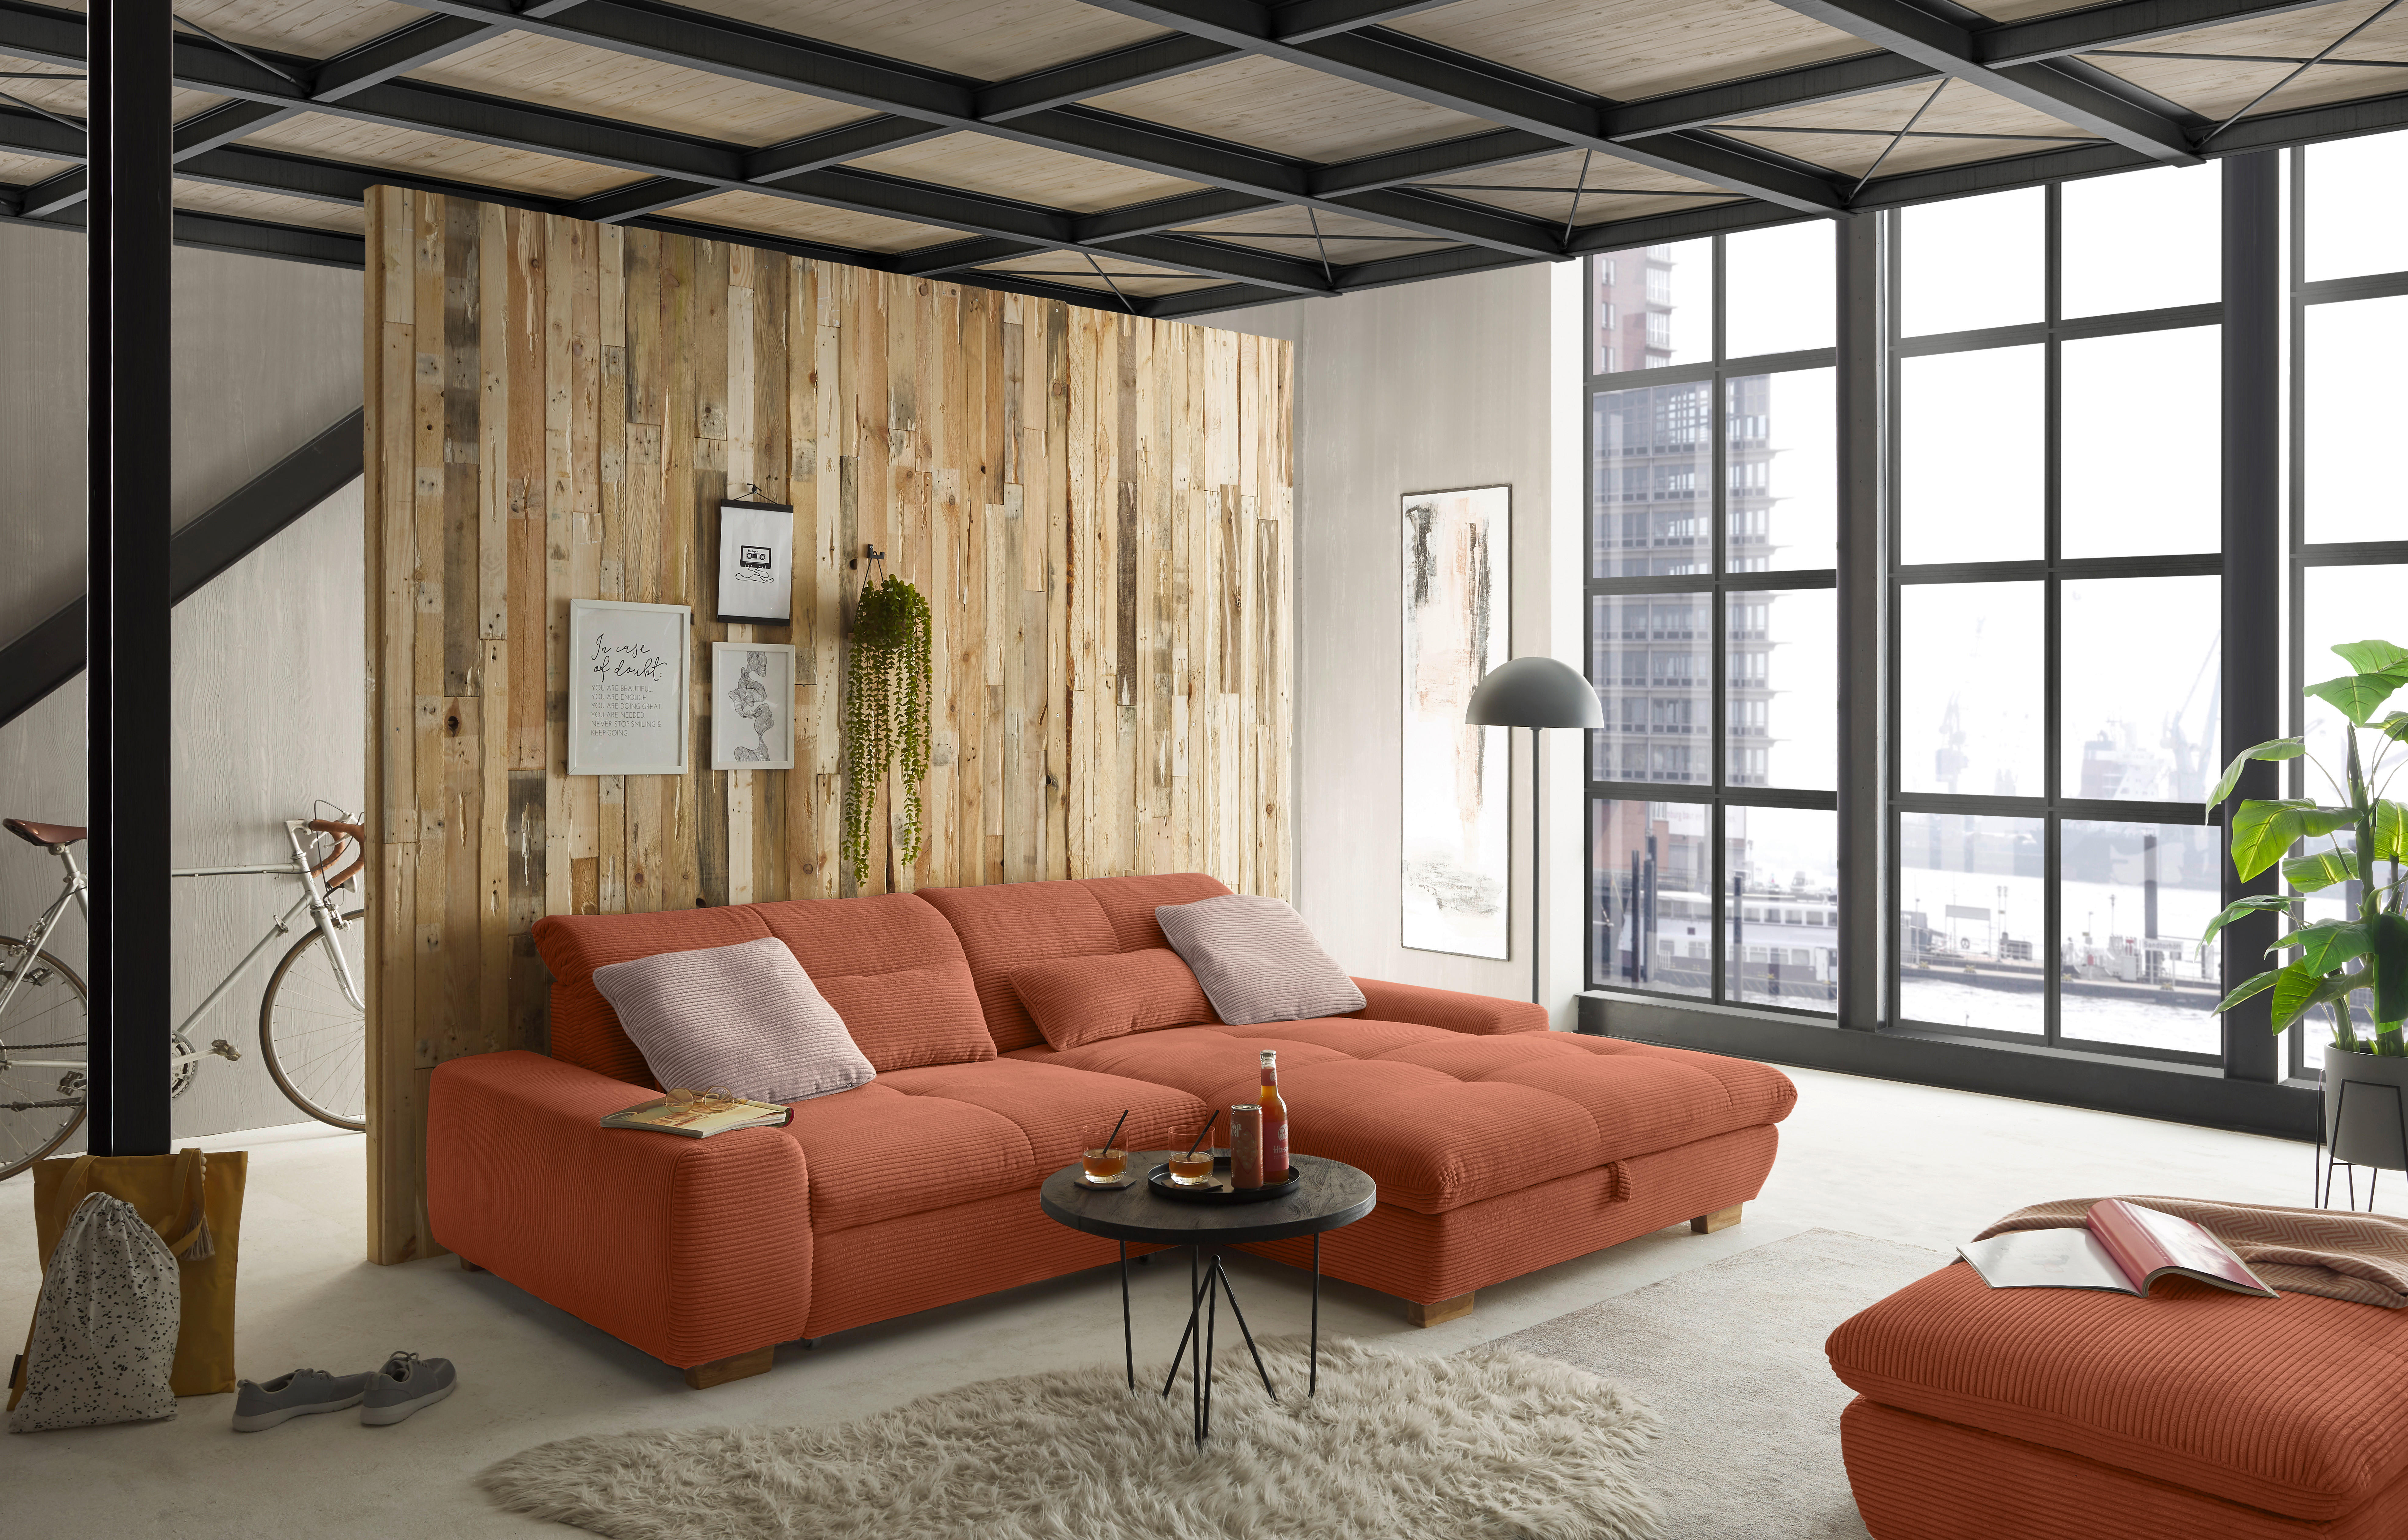 ECKSOFA Orange Cord  - Eichefarben/Orange, Design, Holz/Textil (276/198cm) - SetOne by Musterring